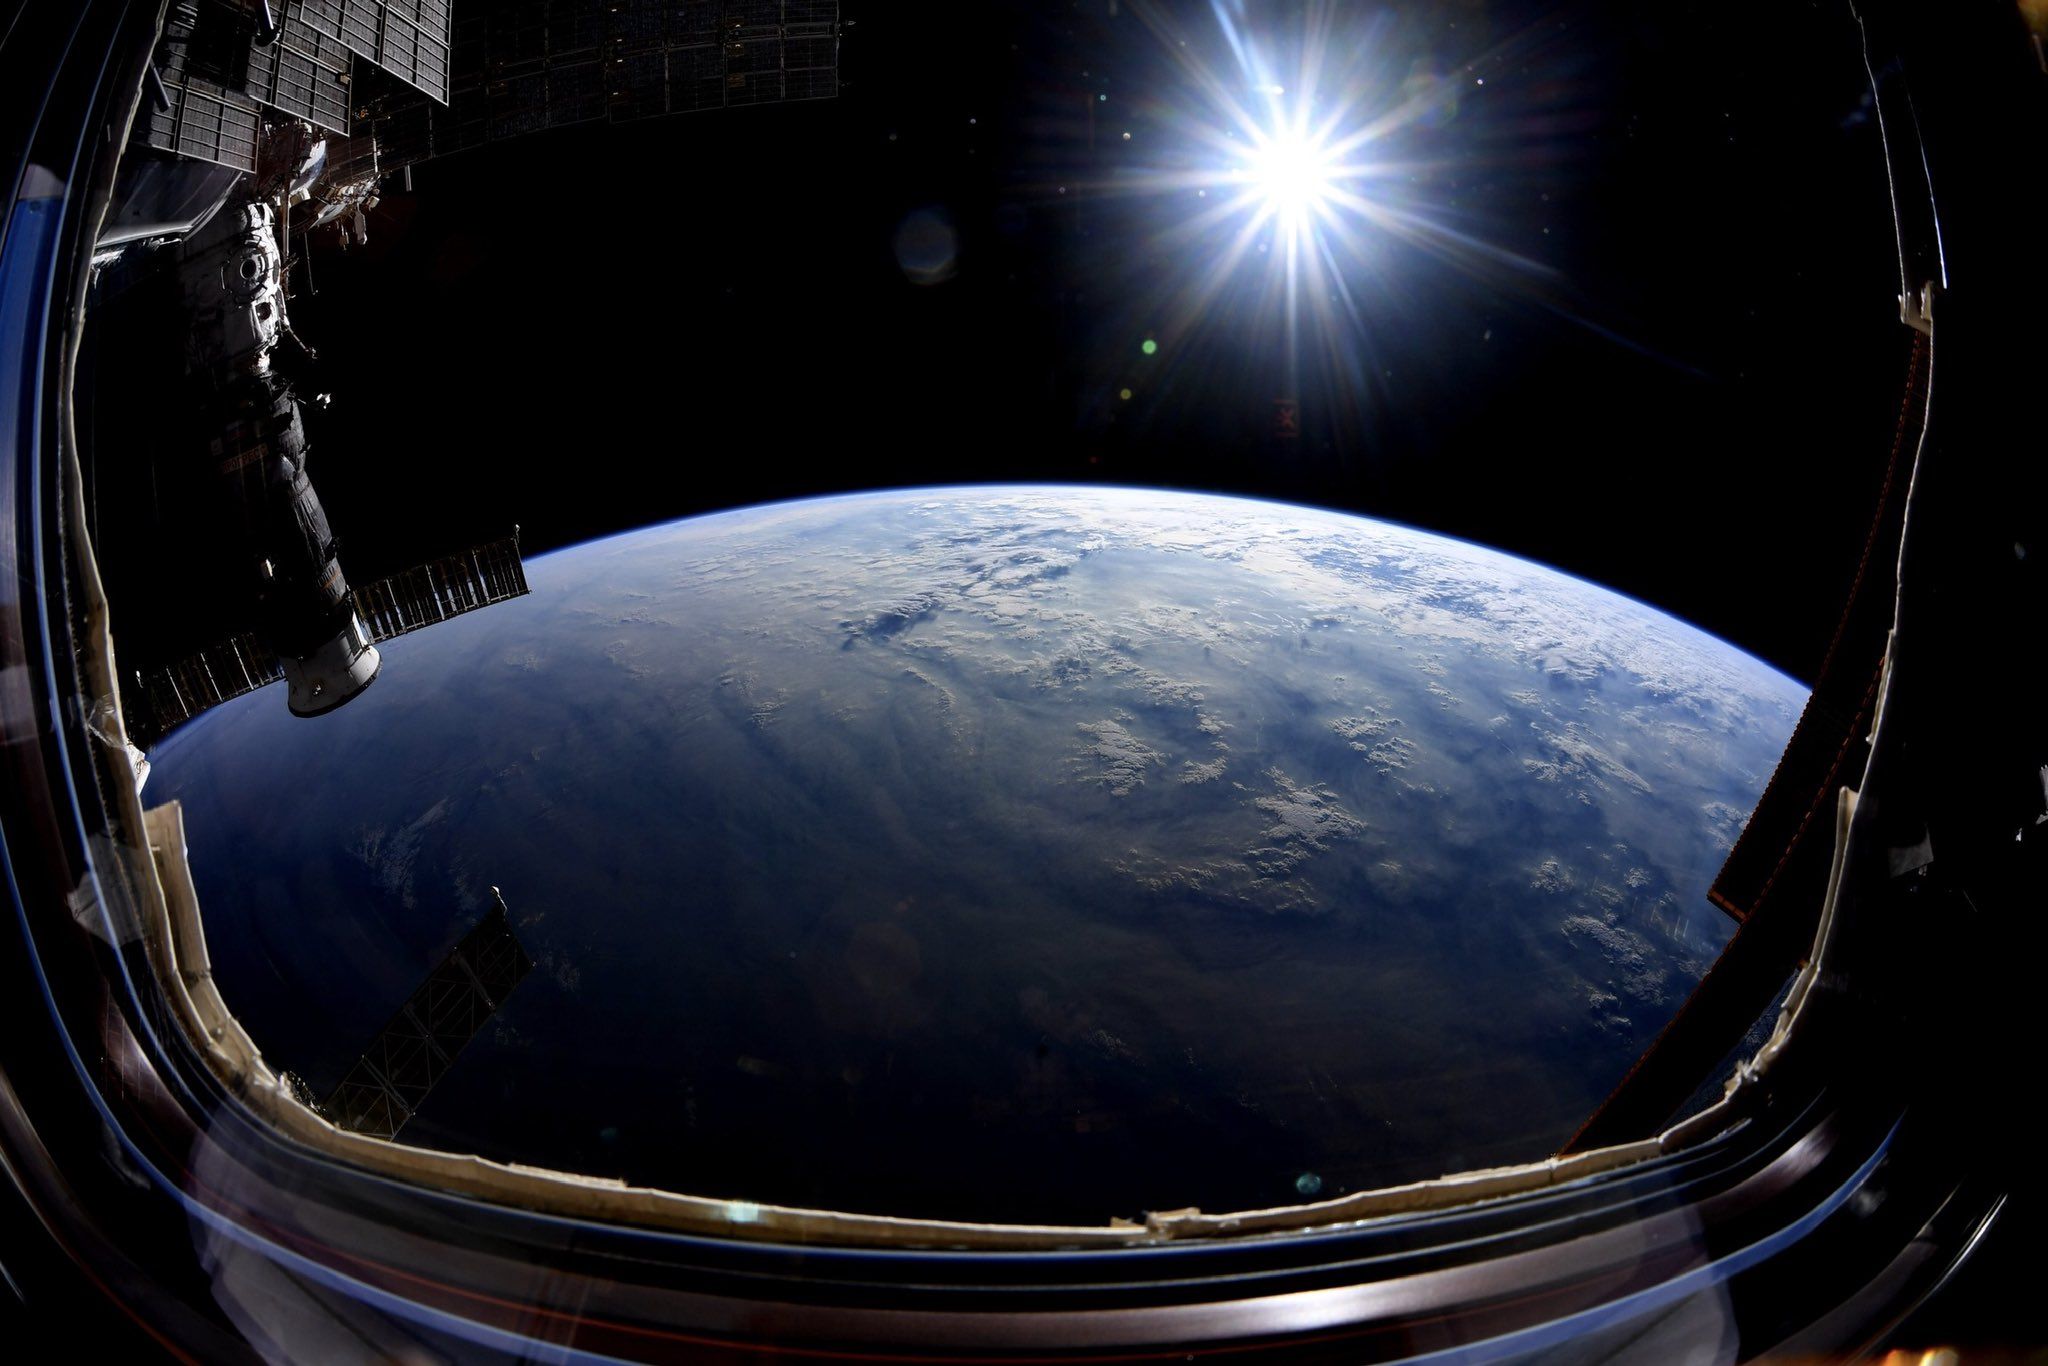 Space view. Снимки земли. Вид земли с орбиты. О земле и космосе. Снимки земли с космоса.